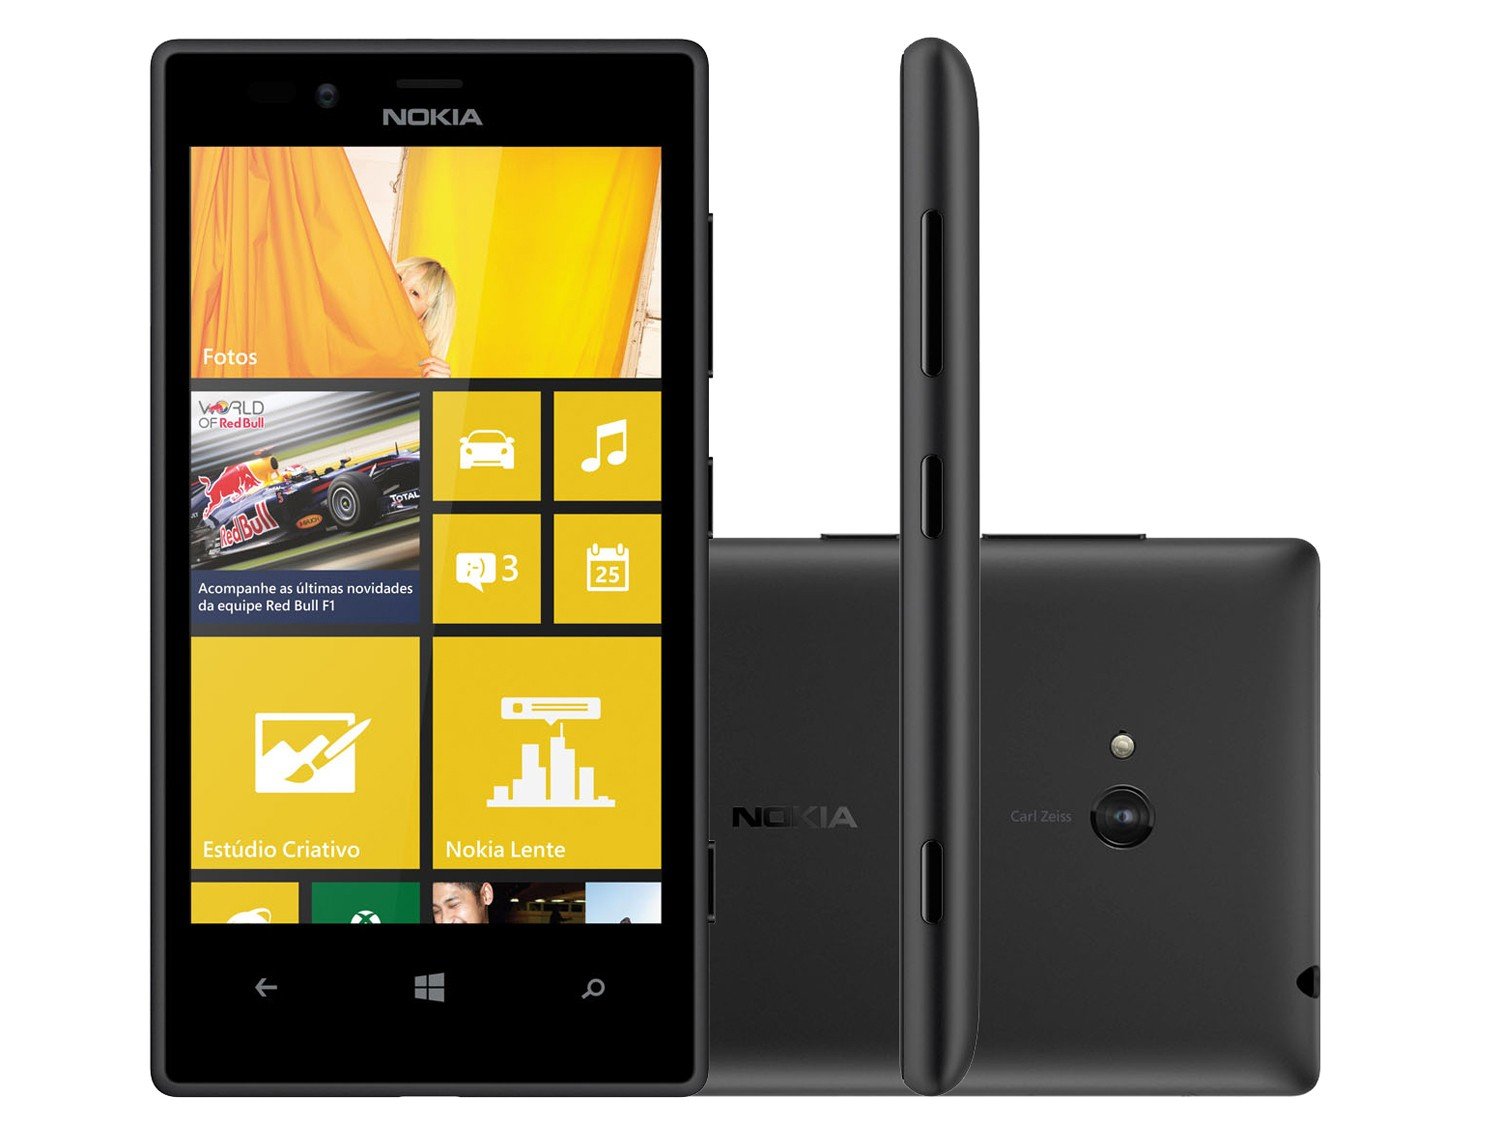 smartphone-3g-nokia-lumia-720-windows-phone-8camera-6.7mp-frontal-hd-1.3mp-tela-4-3-wi-fi-gps-086723800.jpg